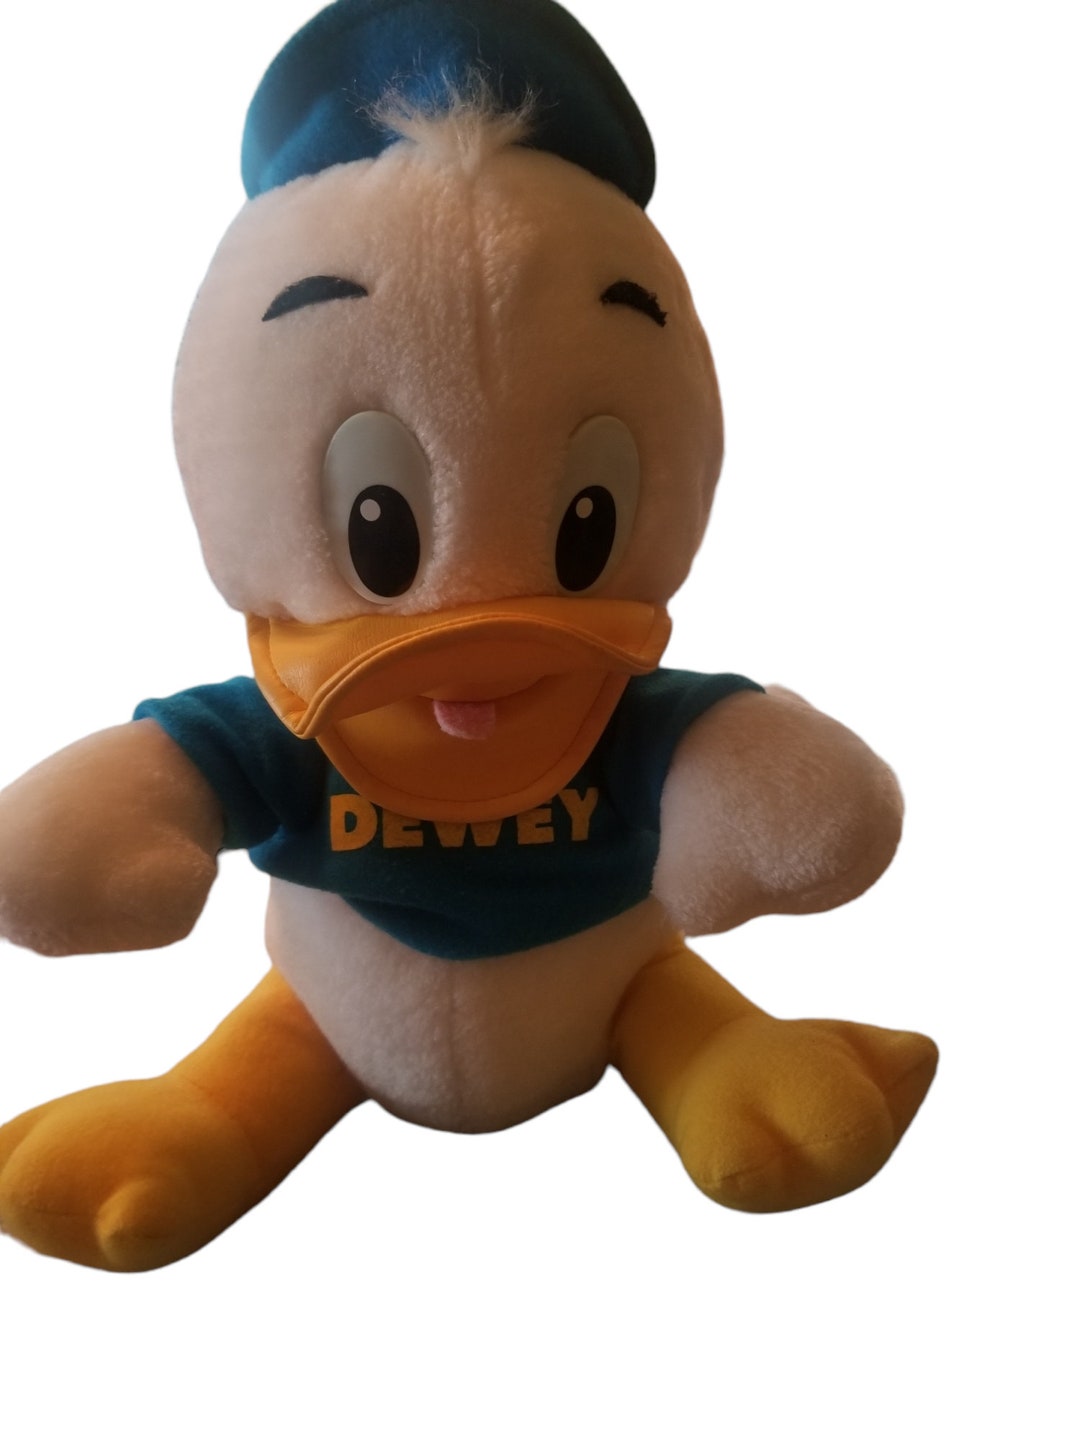 Vintage Dewey From Ducktales Plush Etsy